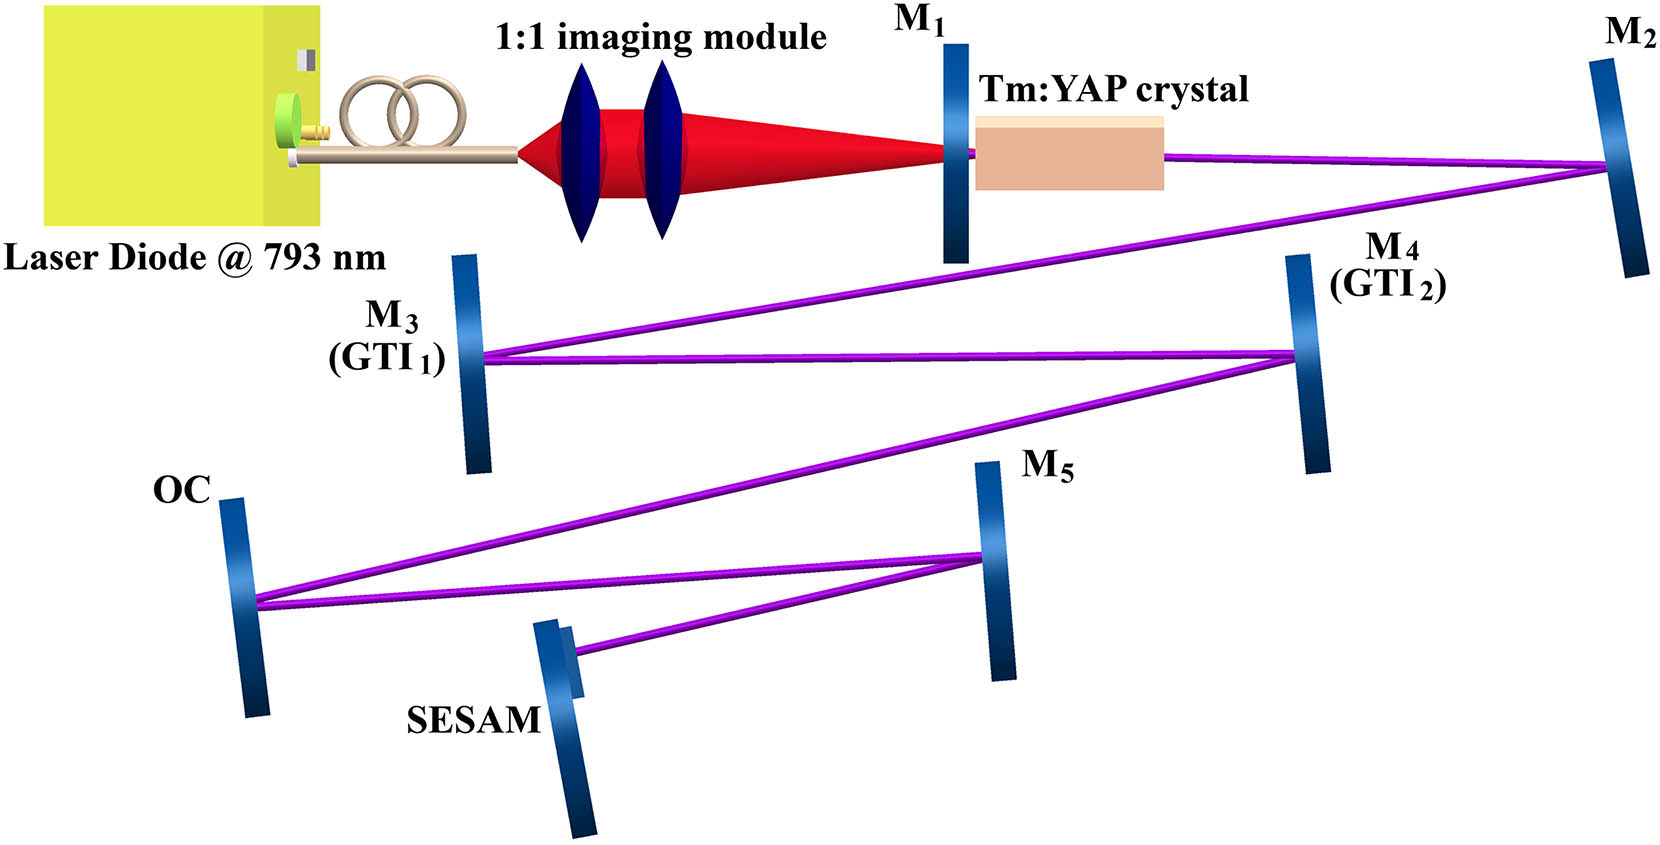 Experimental setup of the dual-wavelength mode-locked Tm:YAP laser.